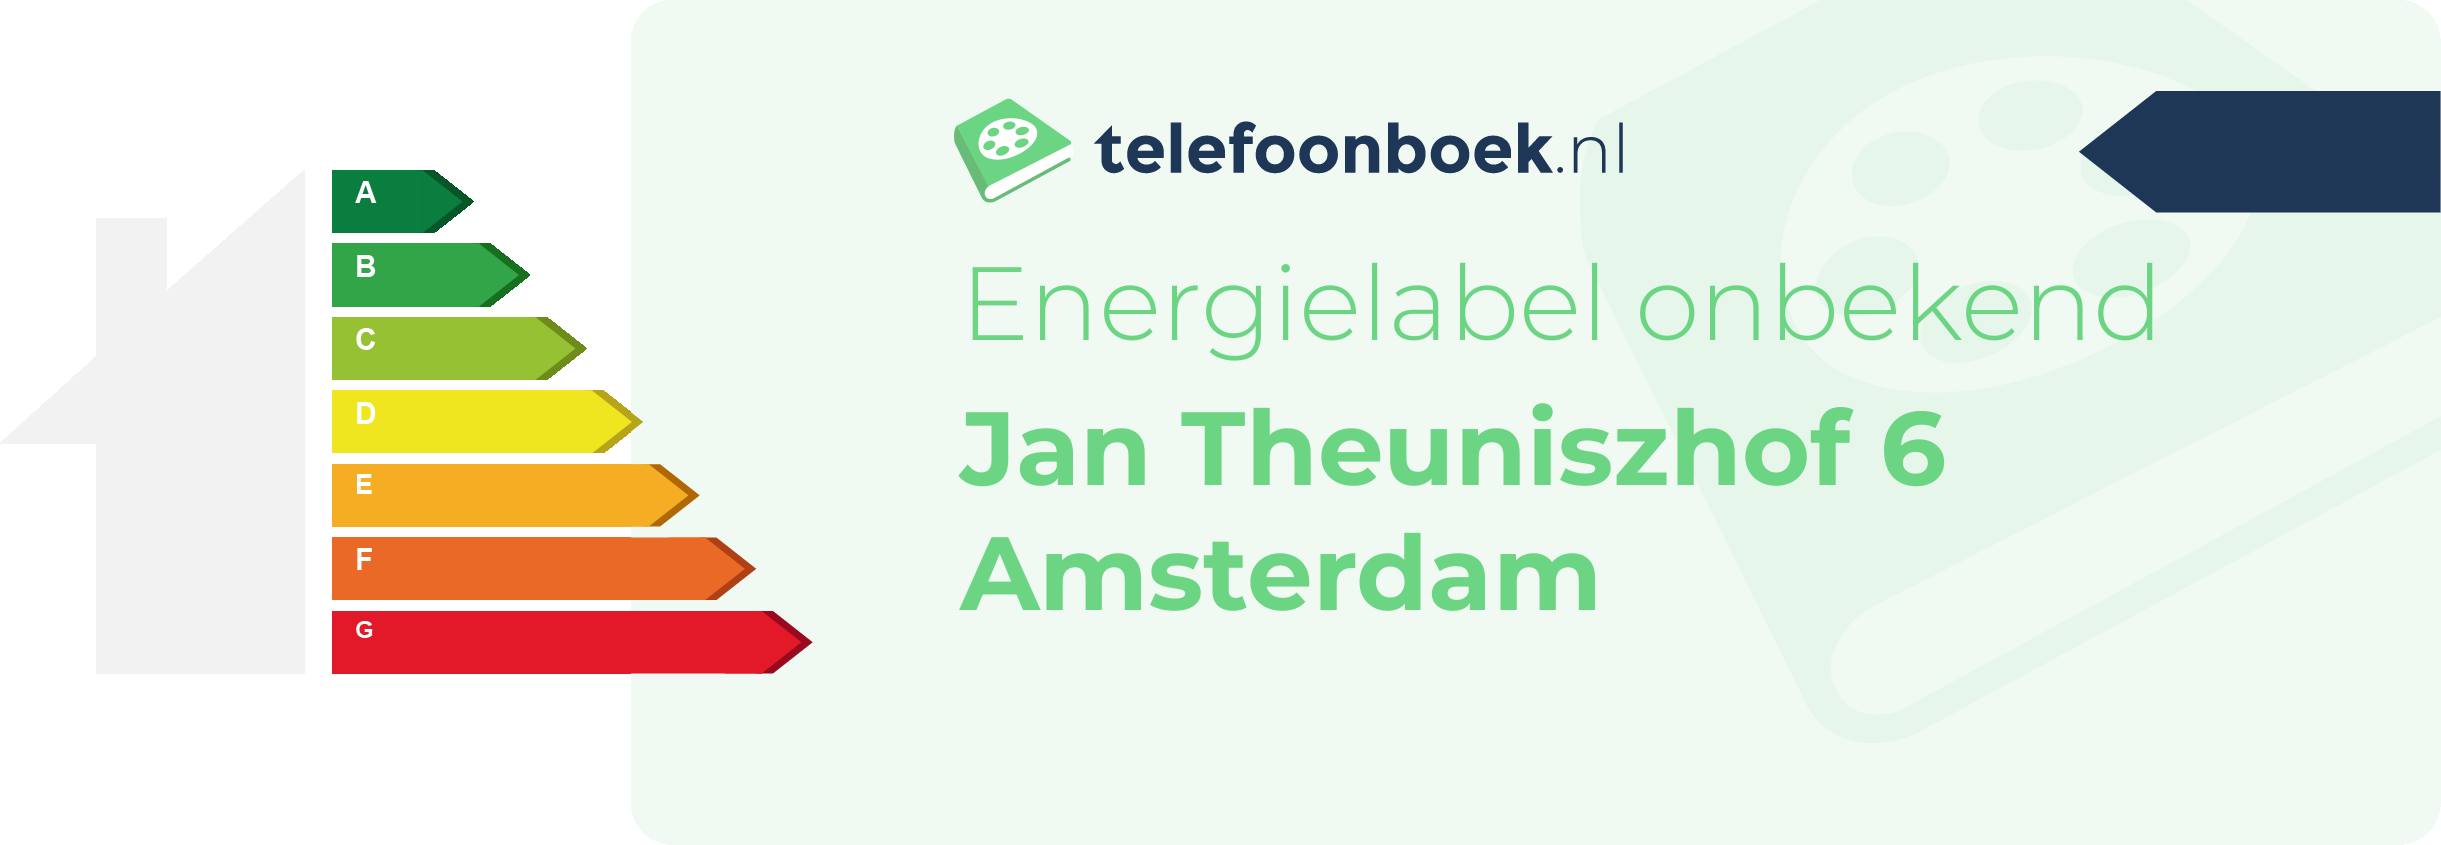 Energielabel Jan Theuniszhof 6 Amsterdam